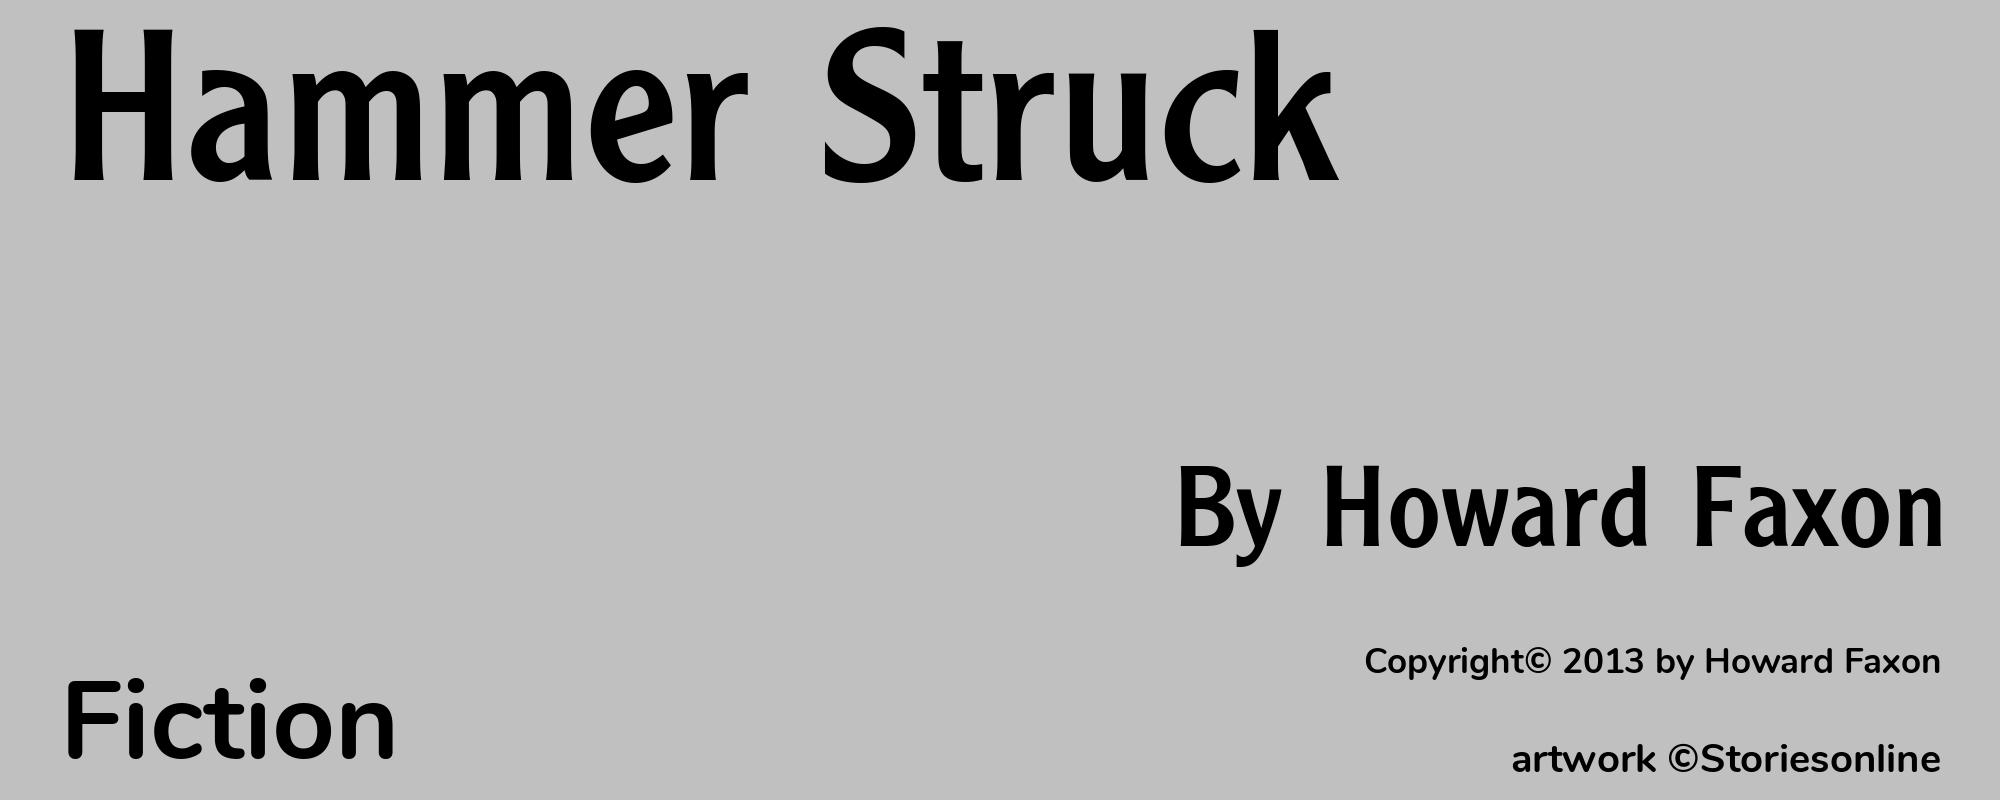 Hammer Struck - Cover